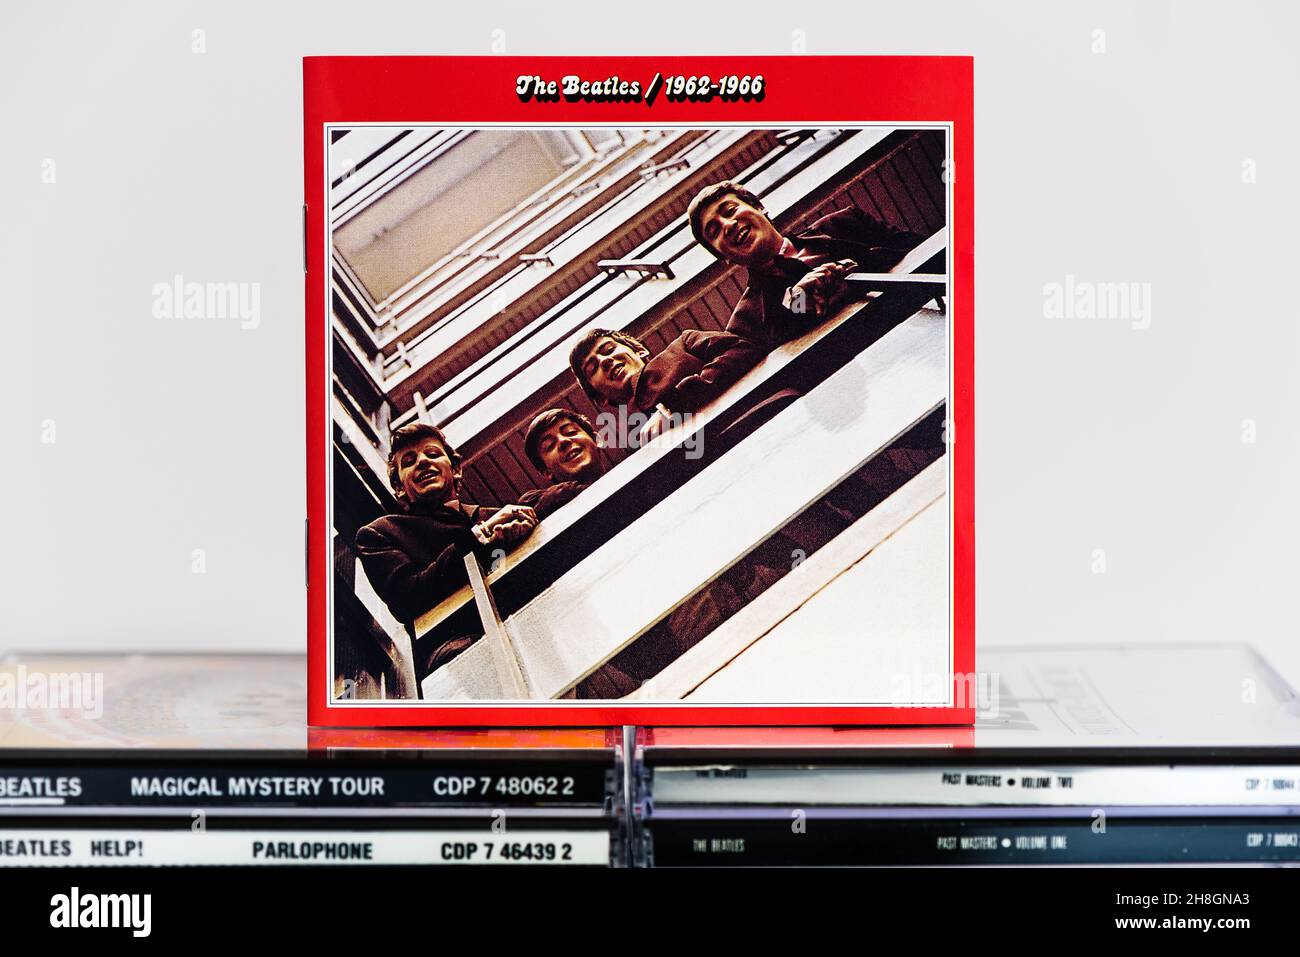 EMI CD  Inlay - The Beatles / 1962-1966. Stock Photo